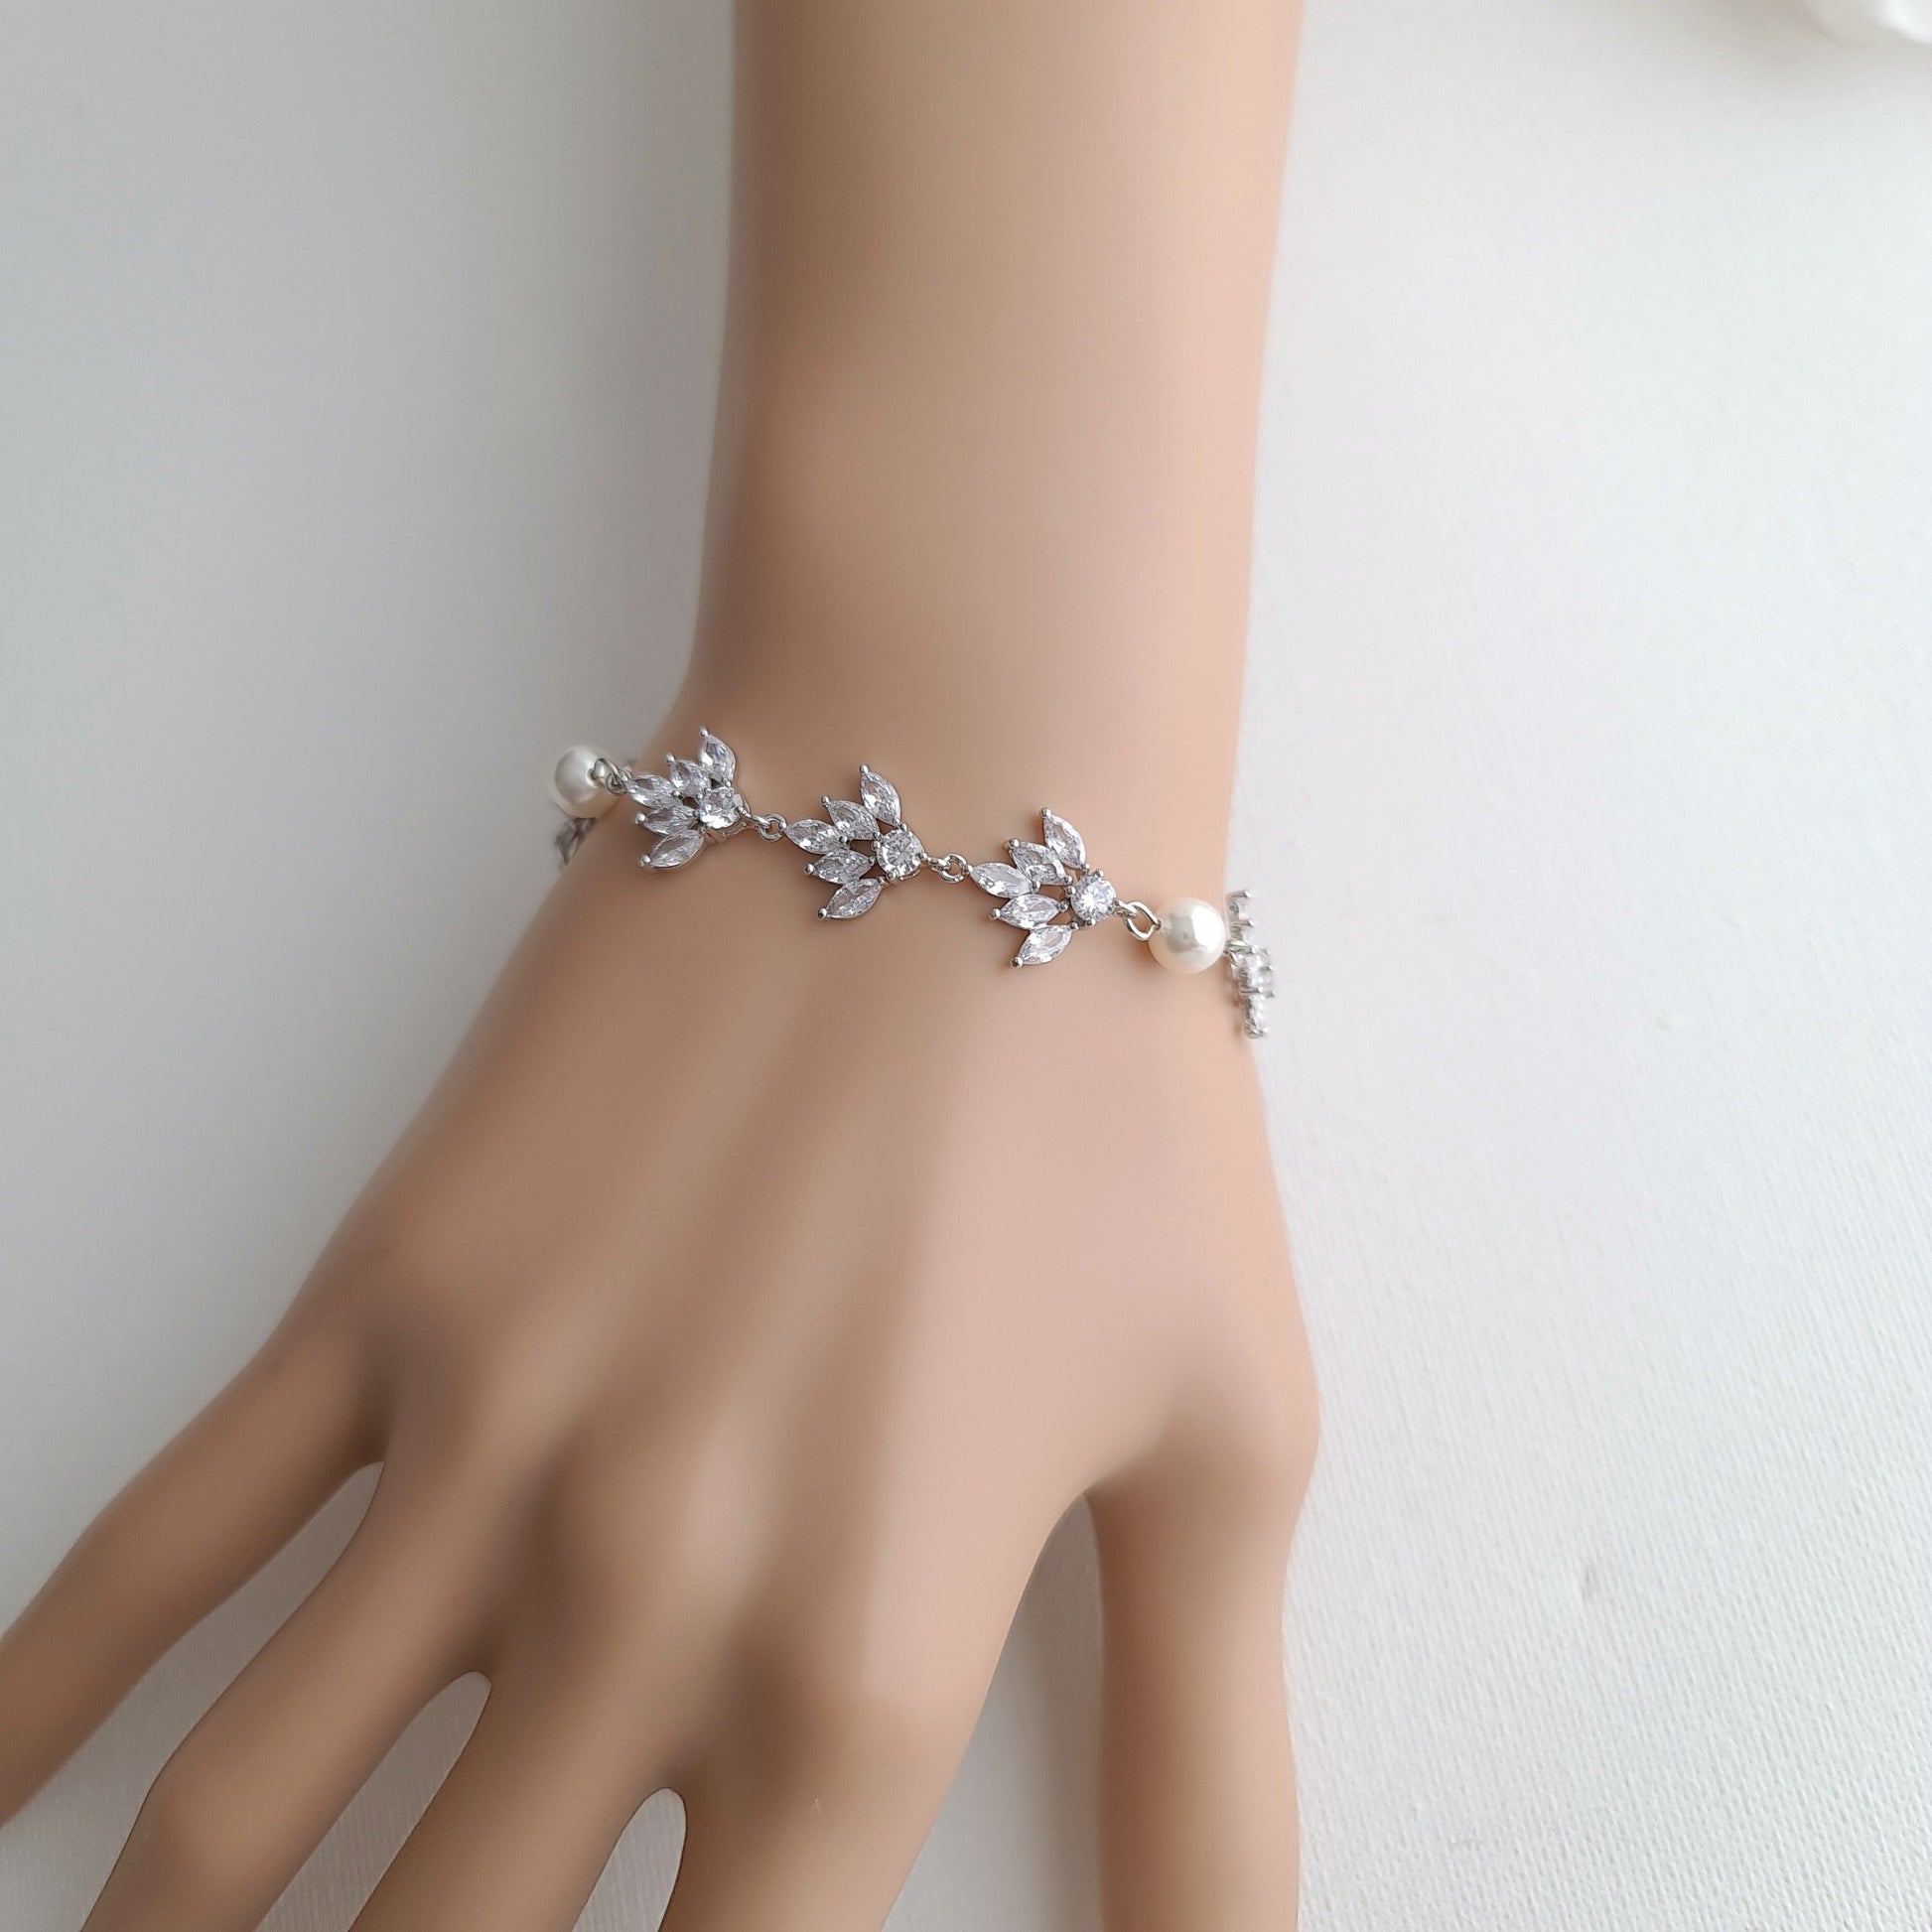 PoetryDesigns Jewelry Set for Brides in Simple Design|Earring,Necklace, Bracelet Set Earrings + Bracelet / Silver